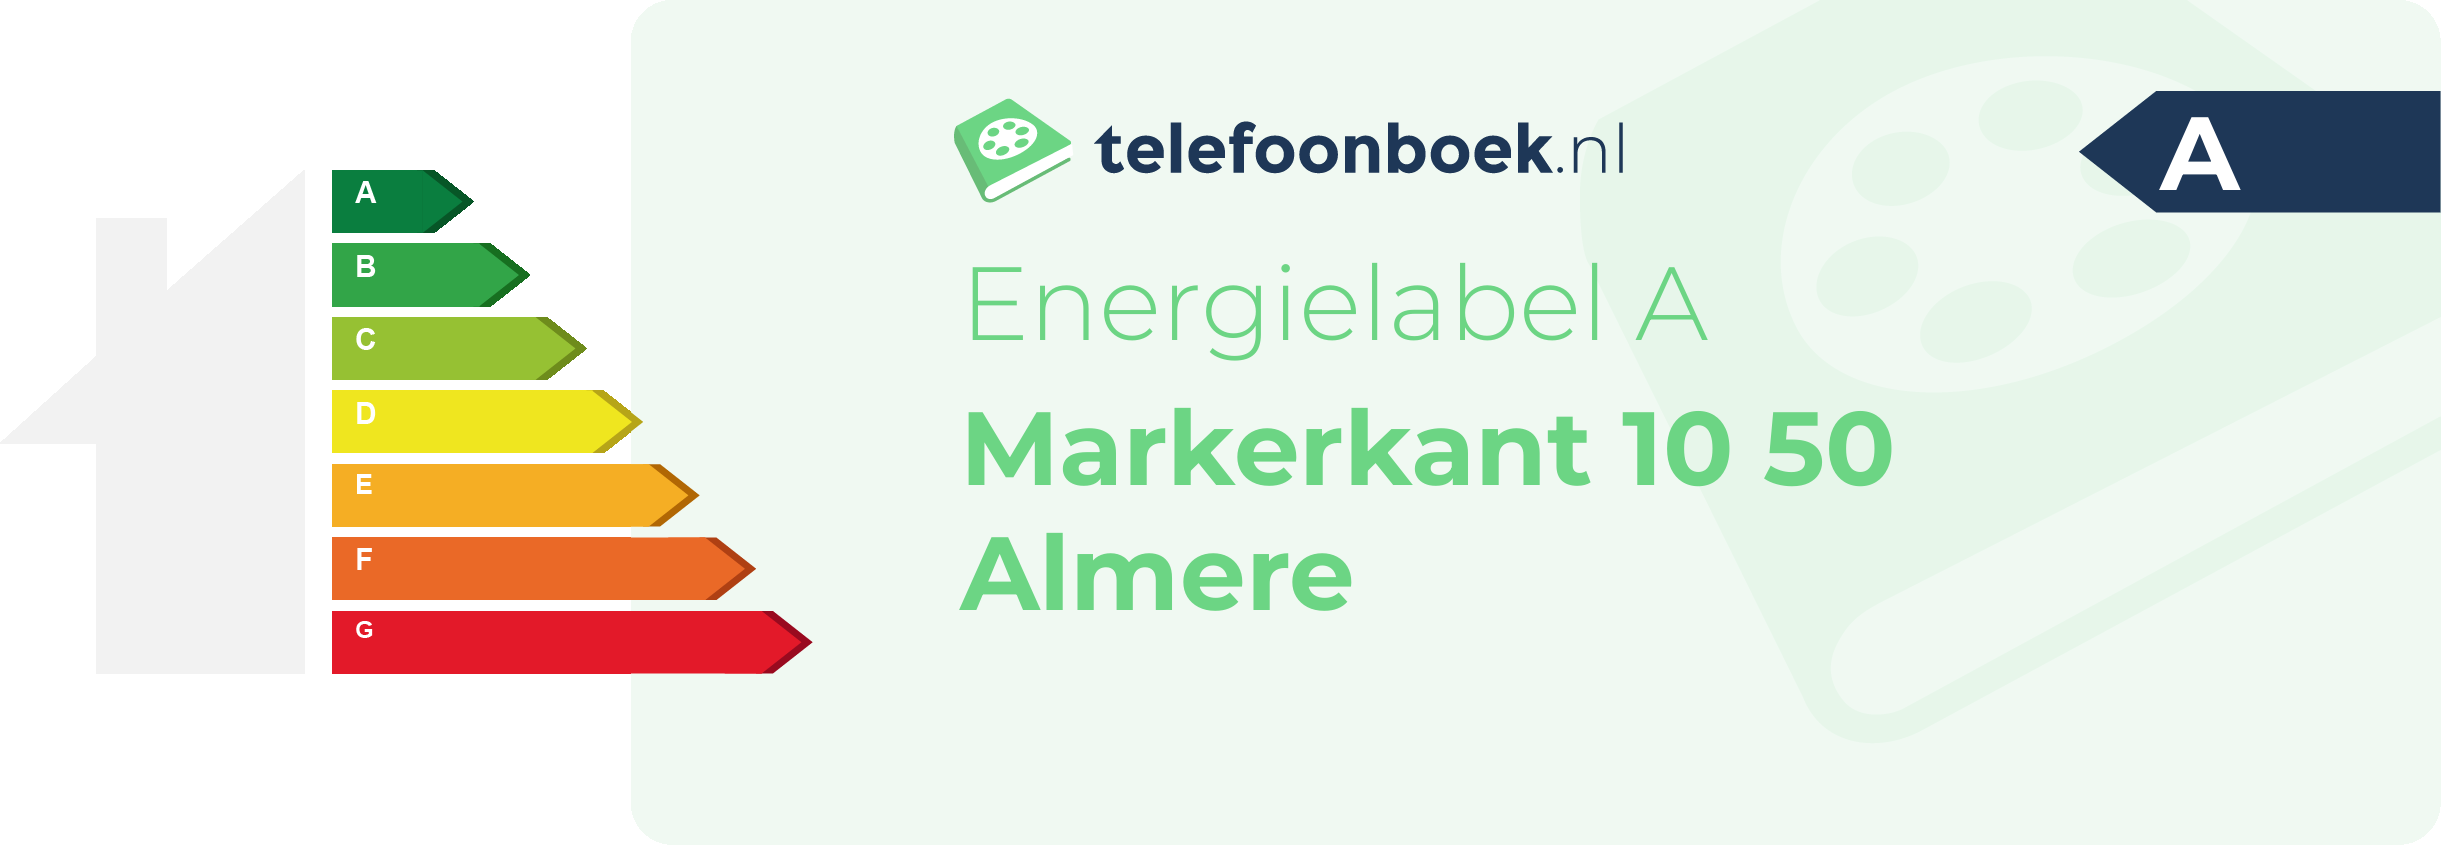 Energielabel Markerkant 10 50 Almere